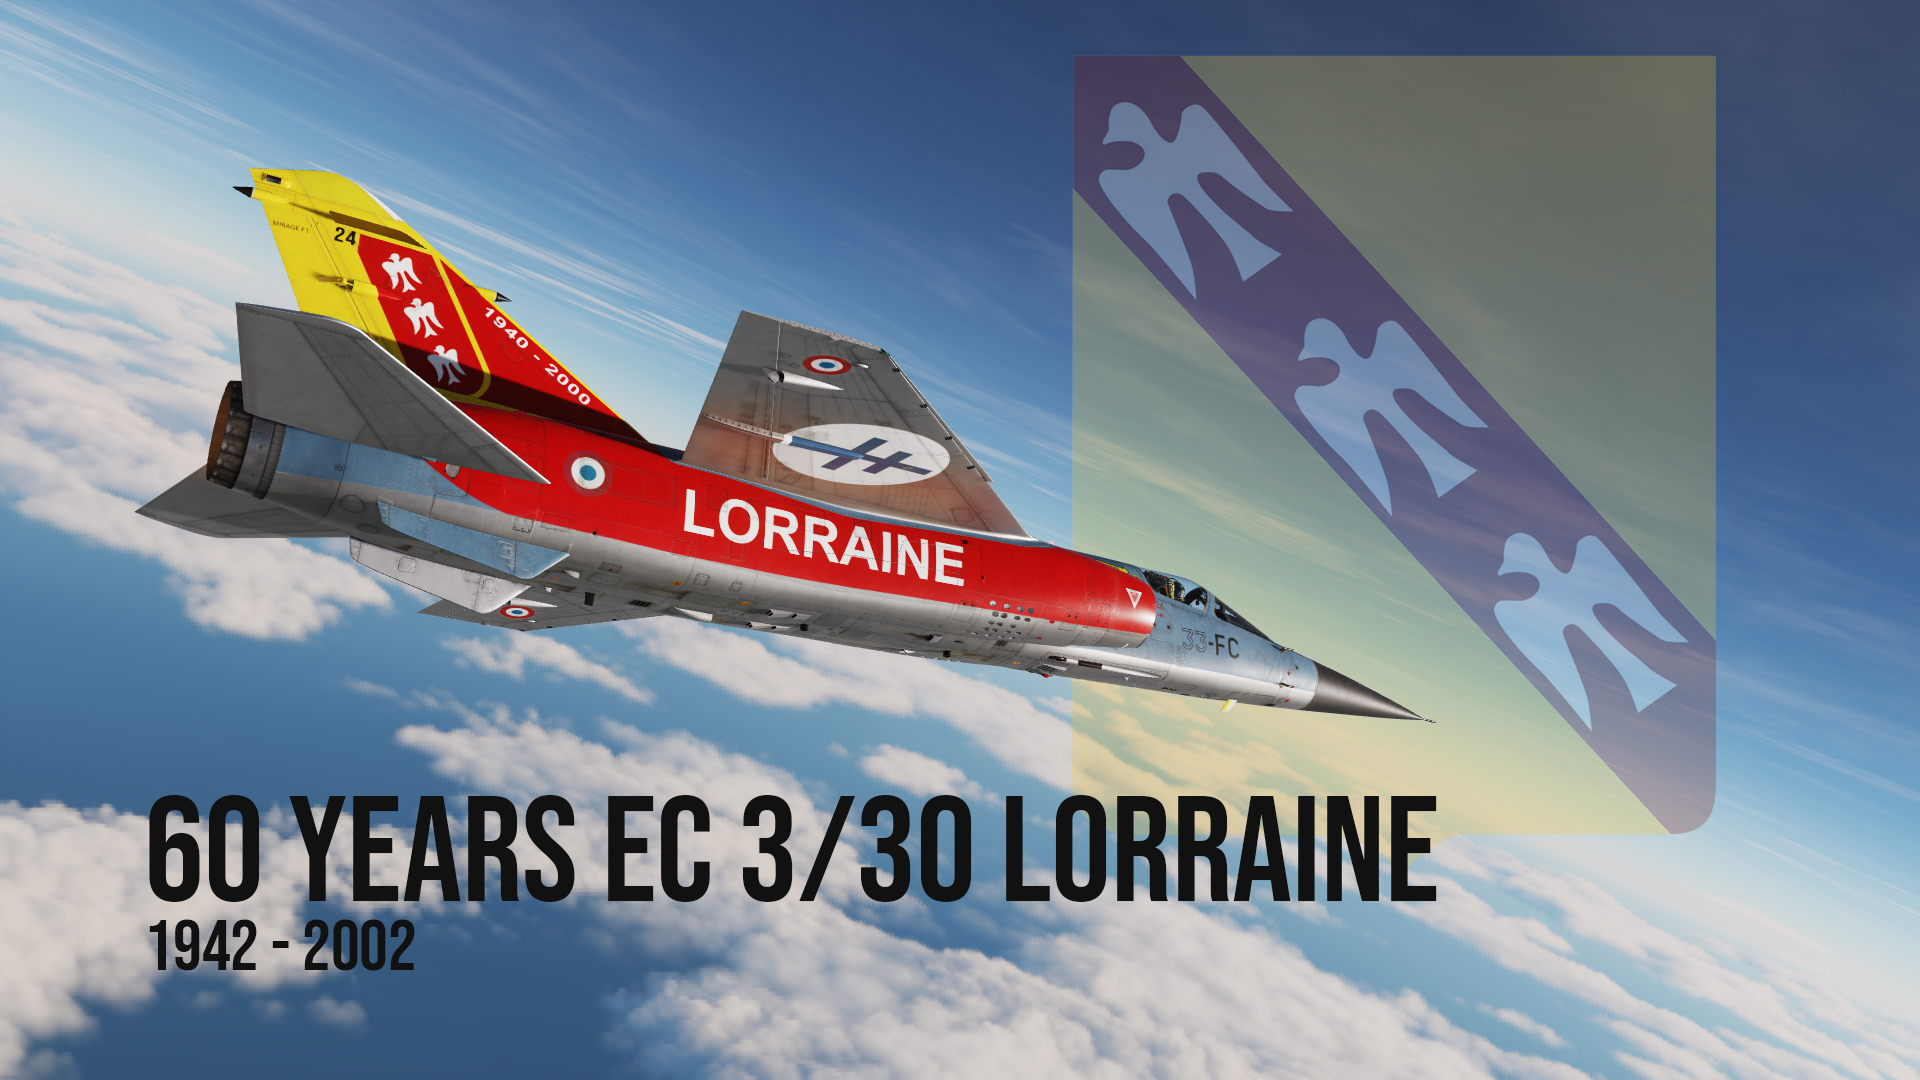 Mirage F-1C, 60 years of EC 3/30 Lorraine, 1940-2000